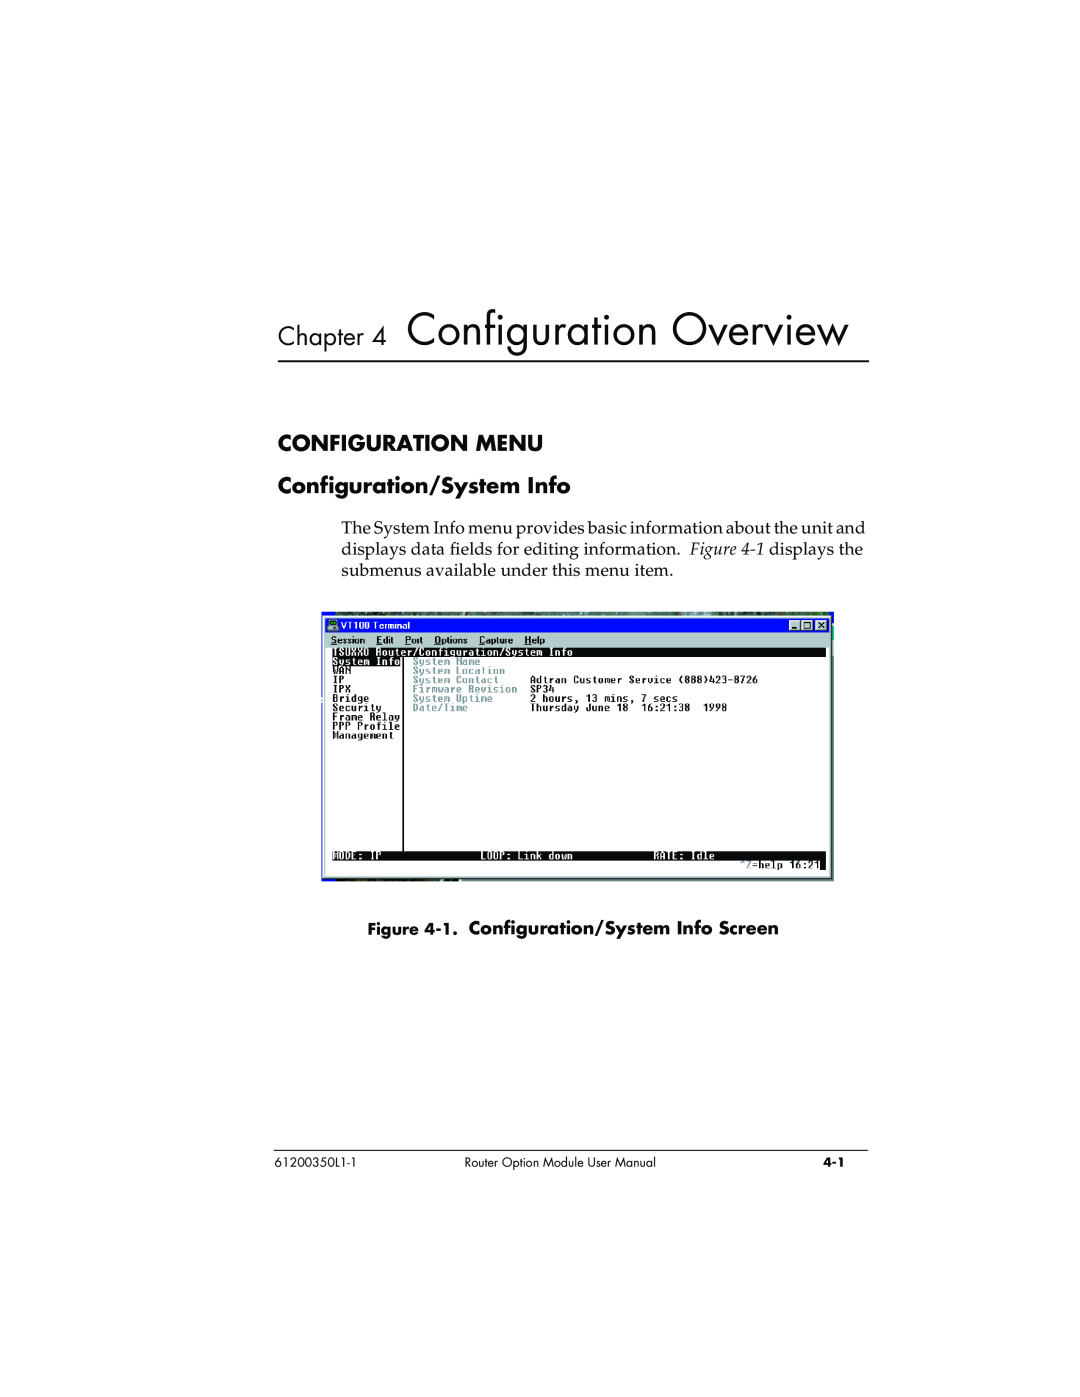 ADTRAN 1200350L1 Configuration Overview, CONFIGURATION MENU Configuration/System Info, 1. Configuration/System Info Screen 